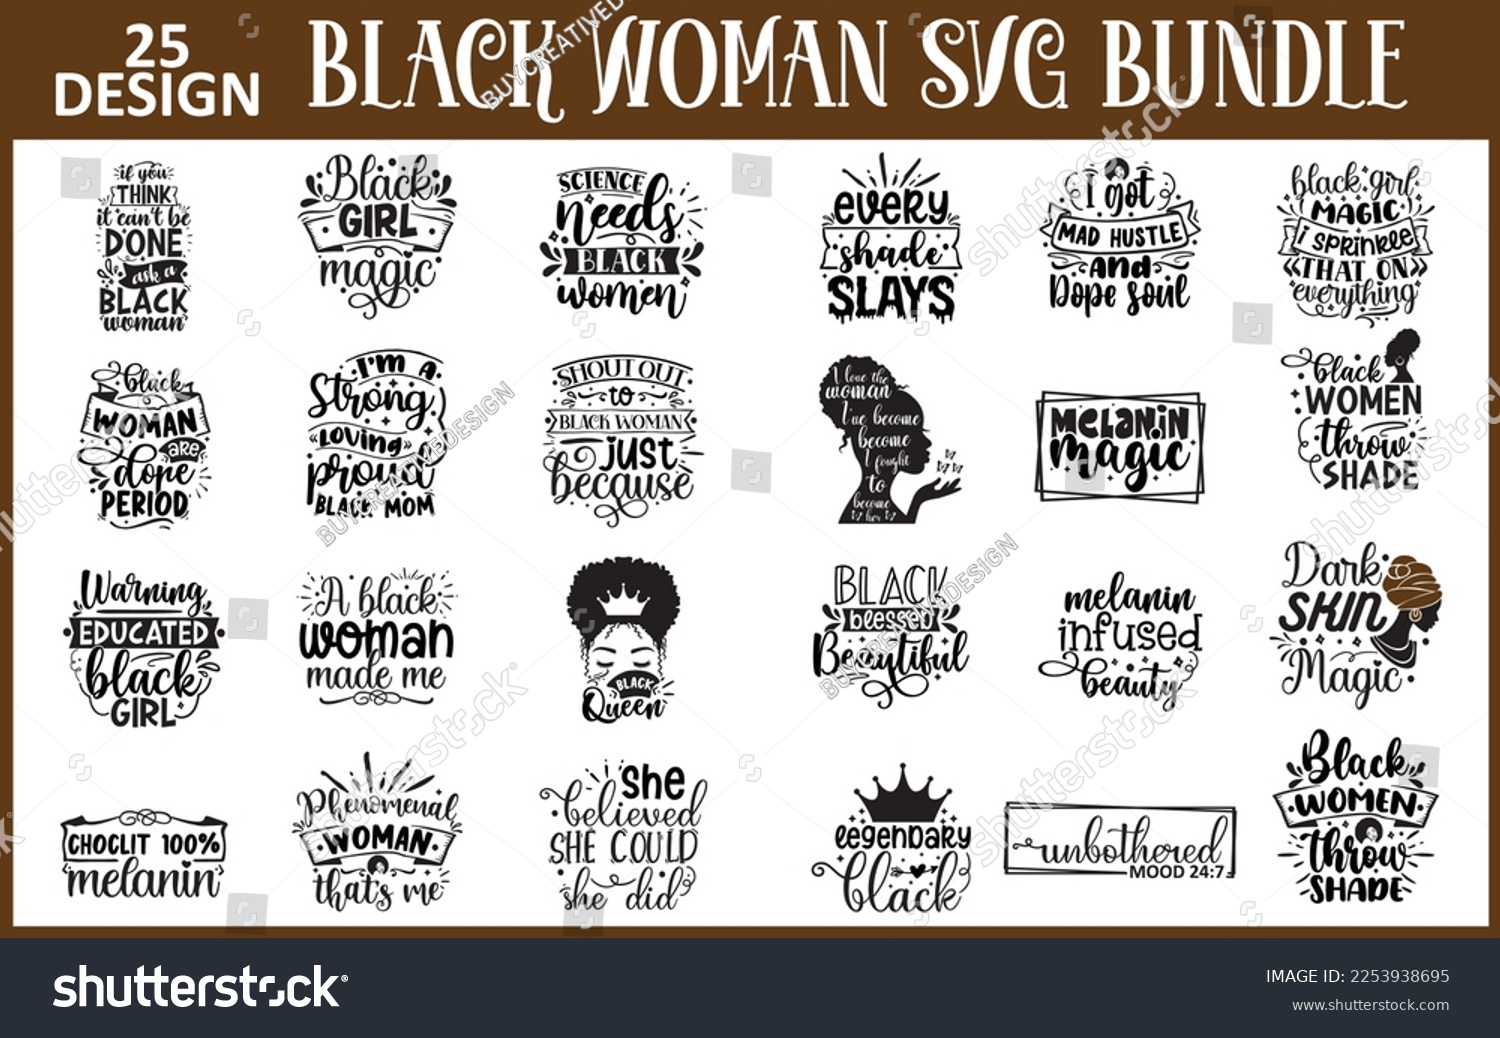 25 Black Woman Svg Bundle Royalty Free Stock Vector 2253938695